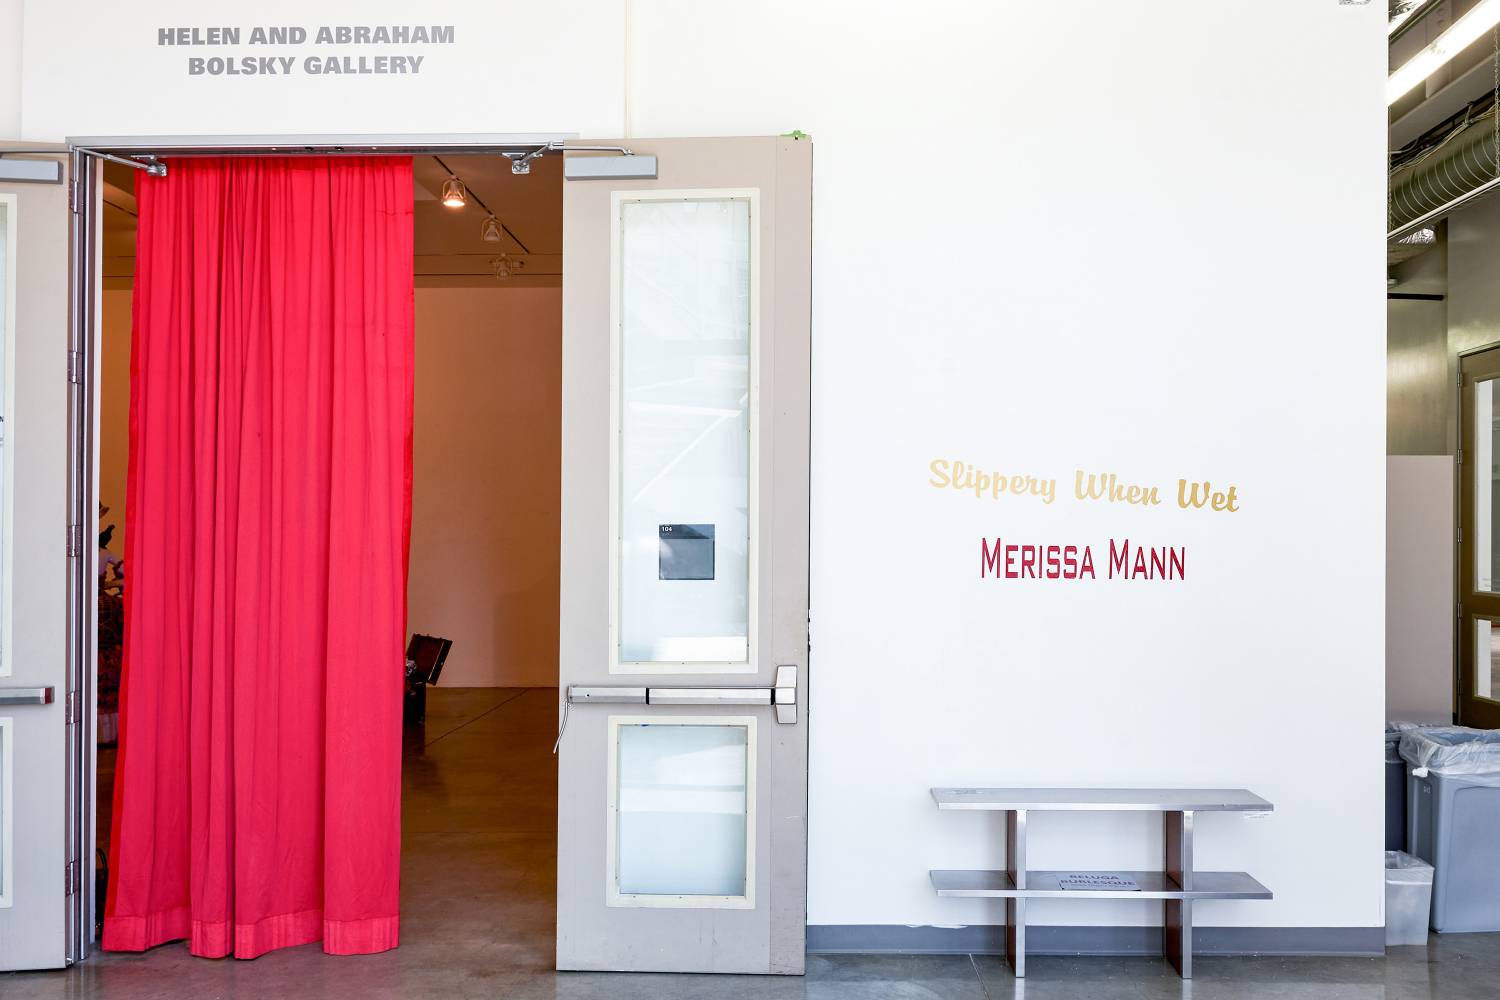 Merissa Mann: Gallery Entrance, Red Curtain